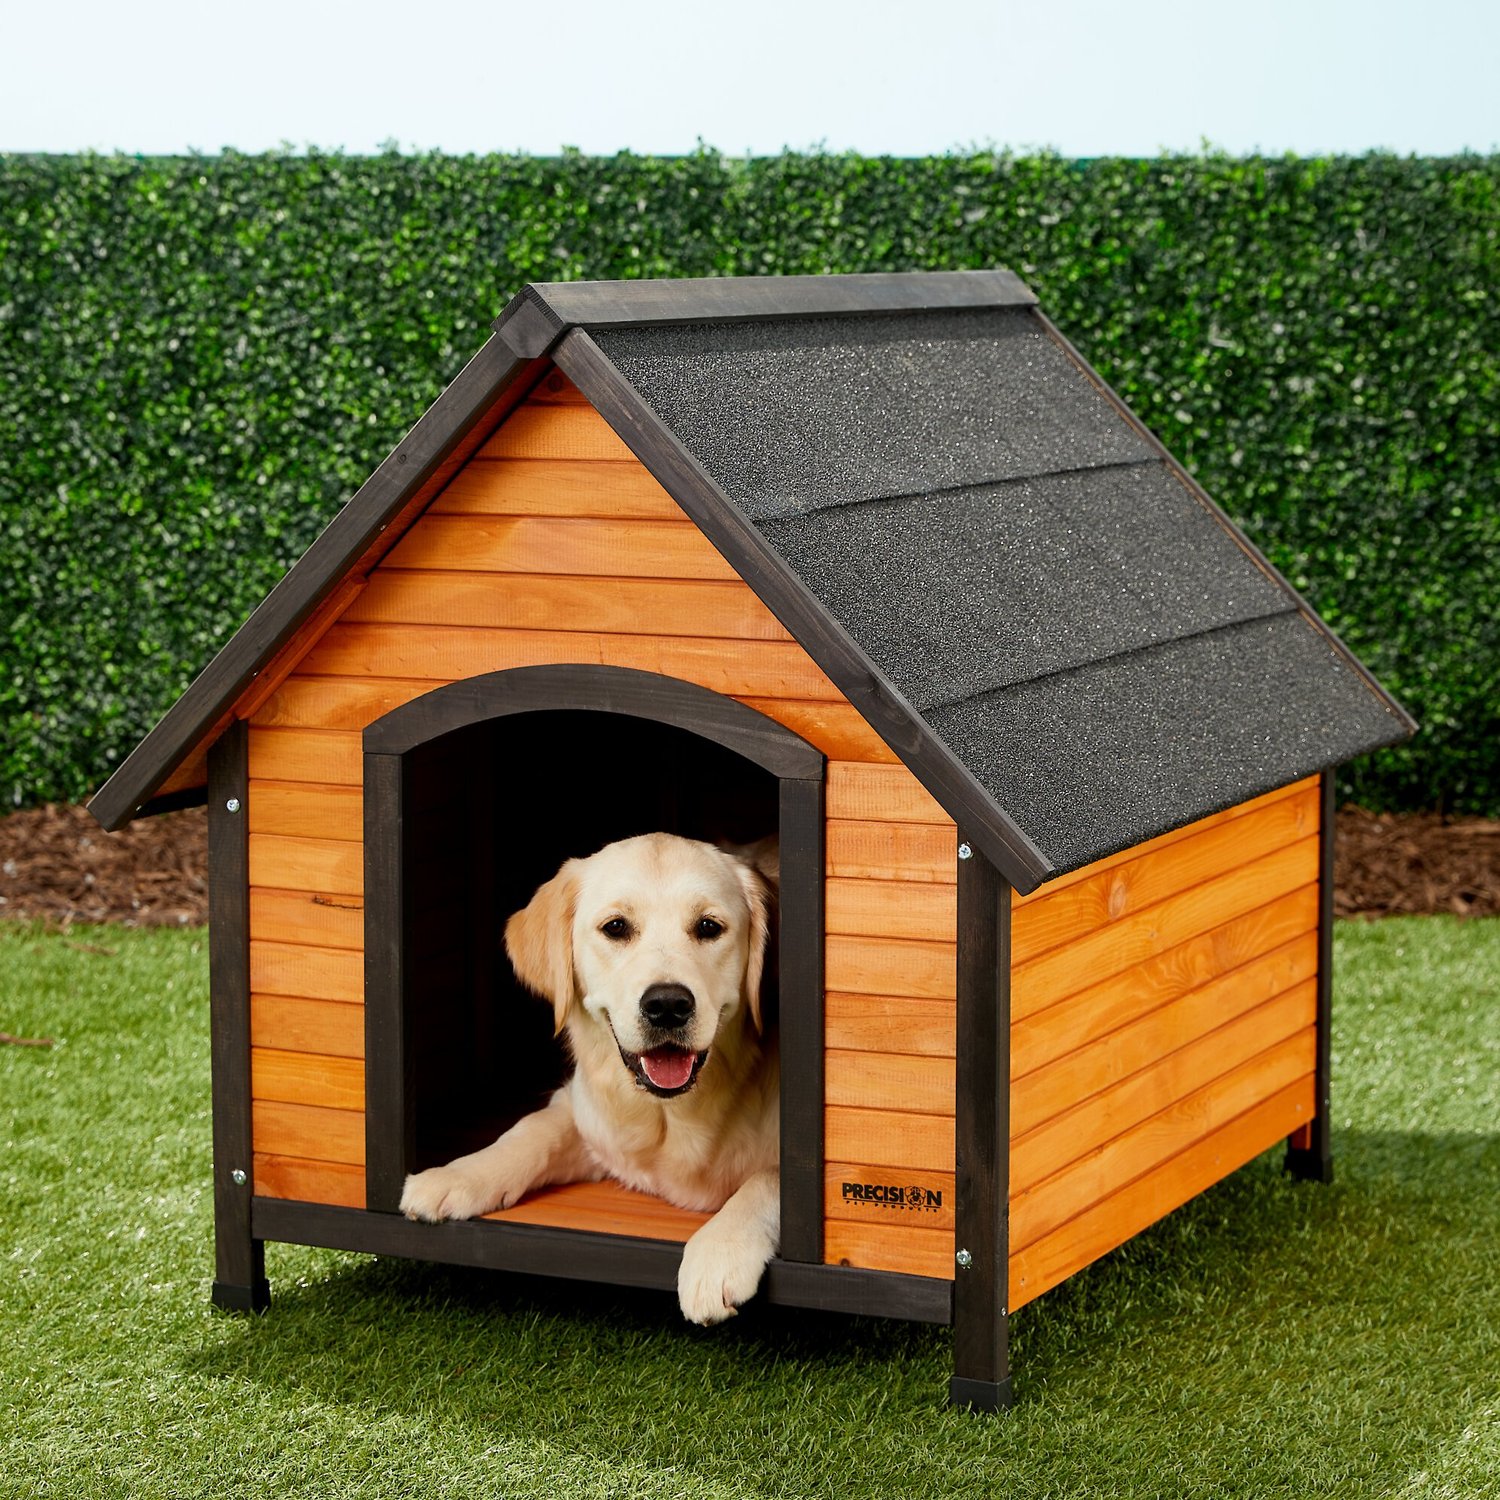 New dog house. Дог Хаус. Усадьба для собаки. Dog House Digital. Dog House Slot.